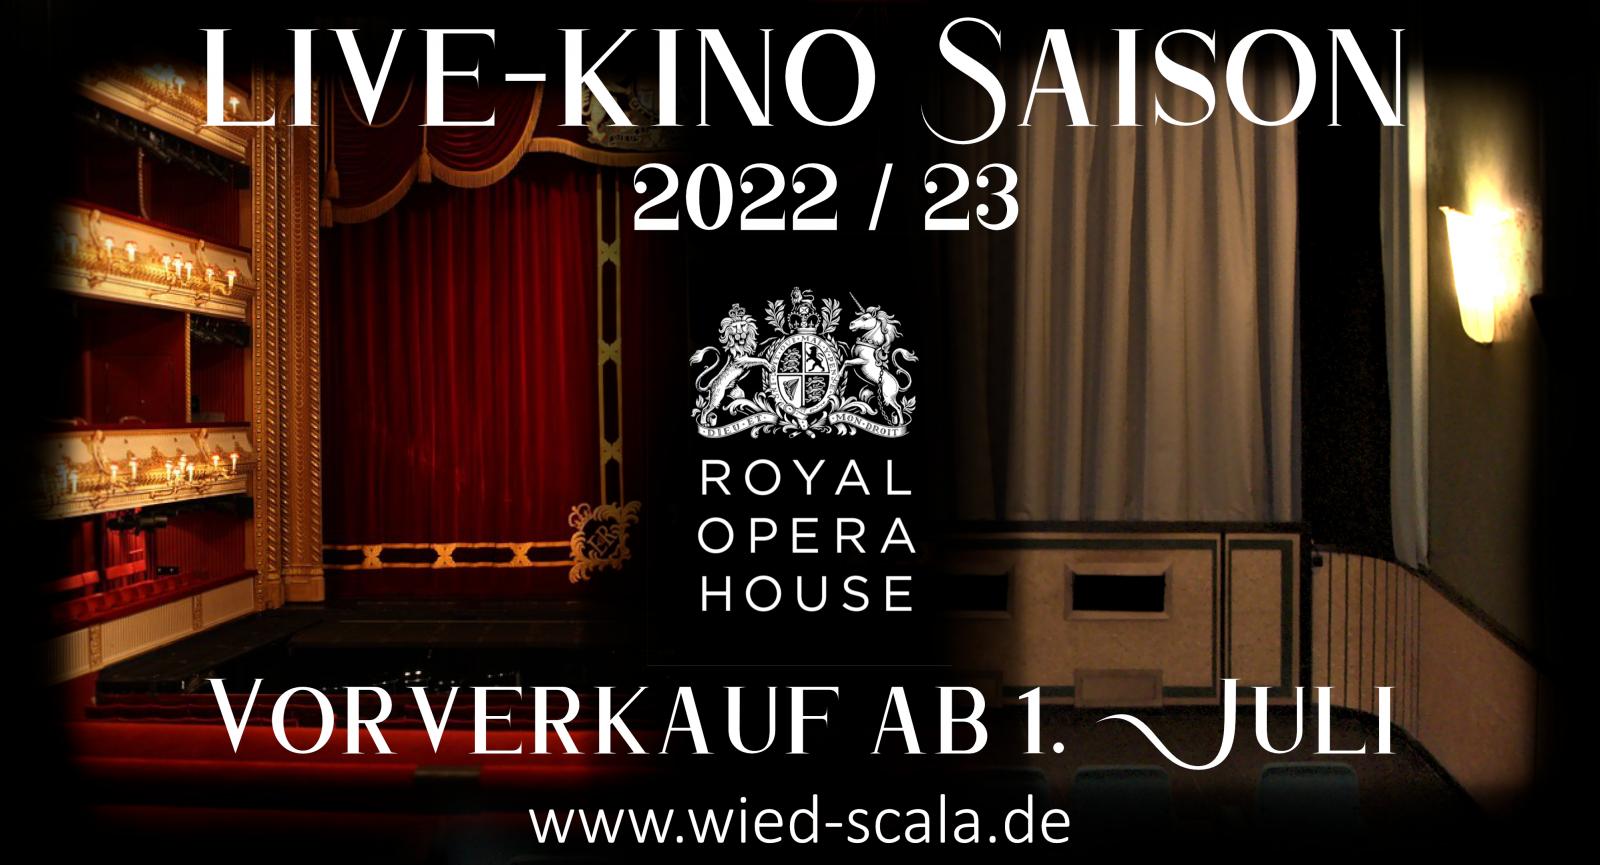 Royal Opera House | LIVE-Kino Saison 2022/23